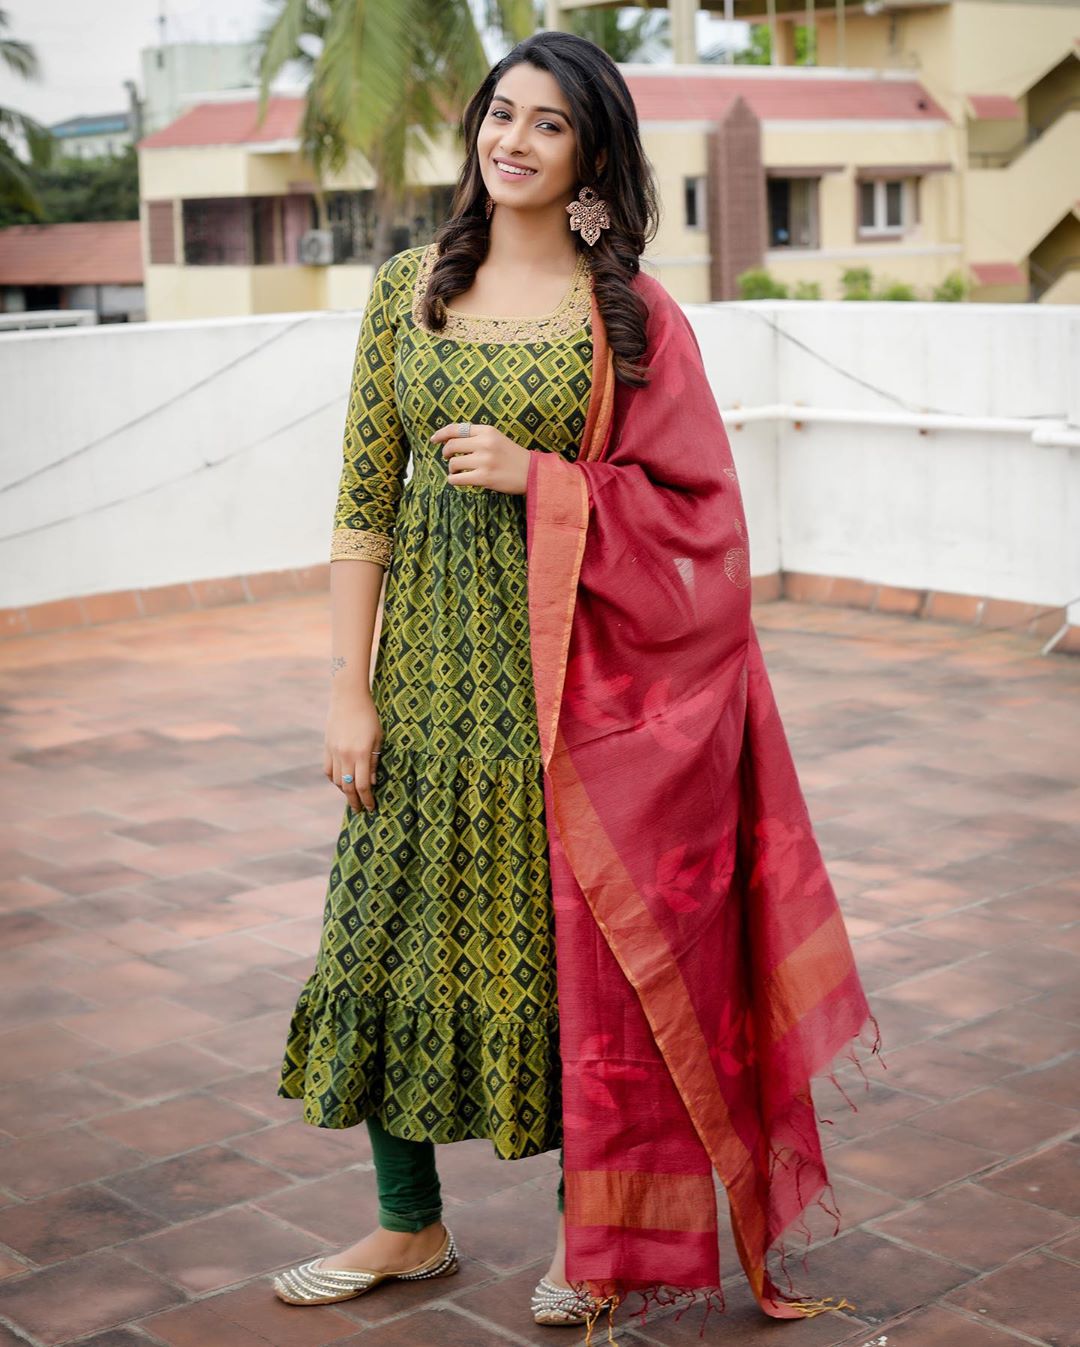 Actress Priya Bhavani Shankar Beautiful Photoshoot In Sudithar